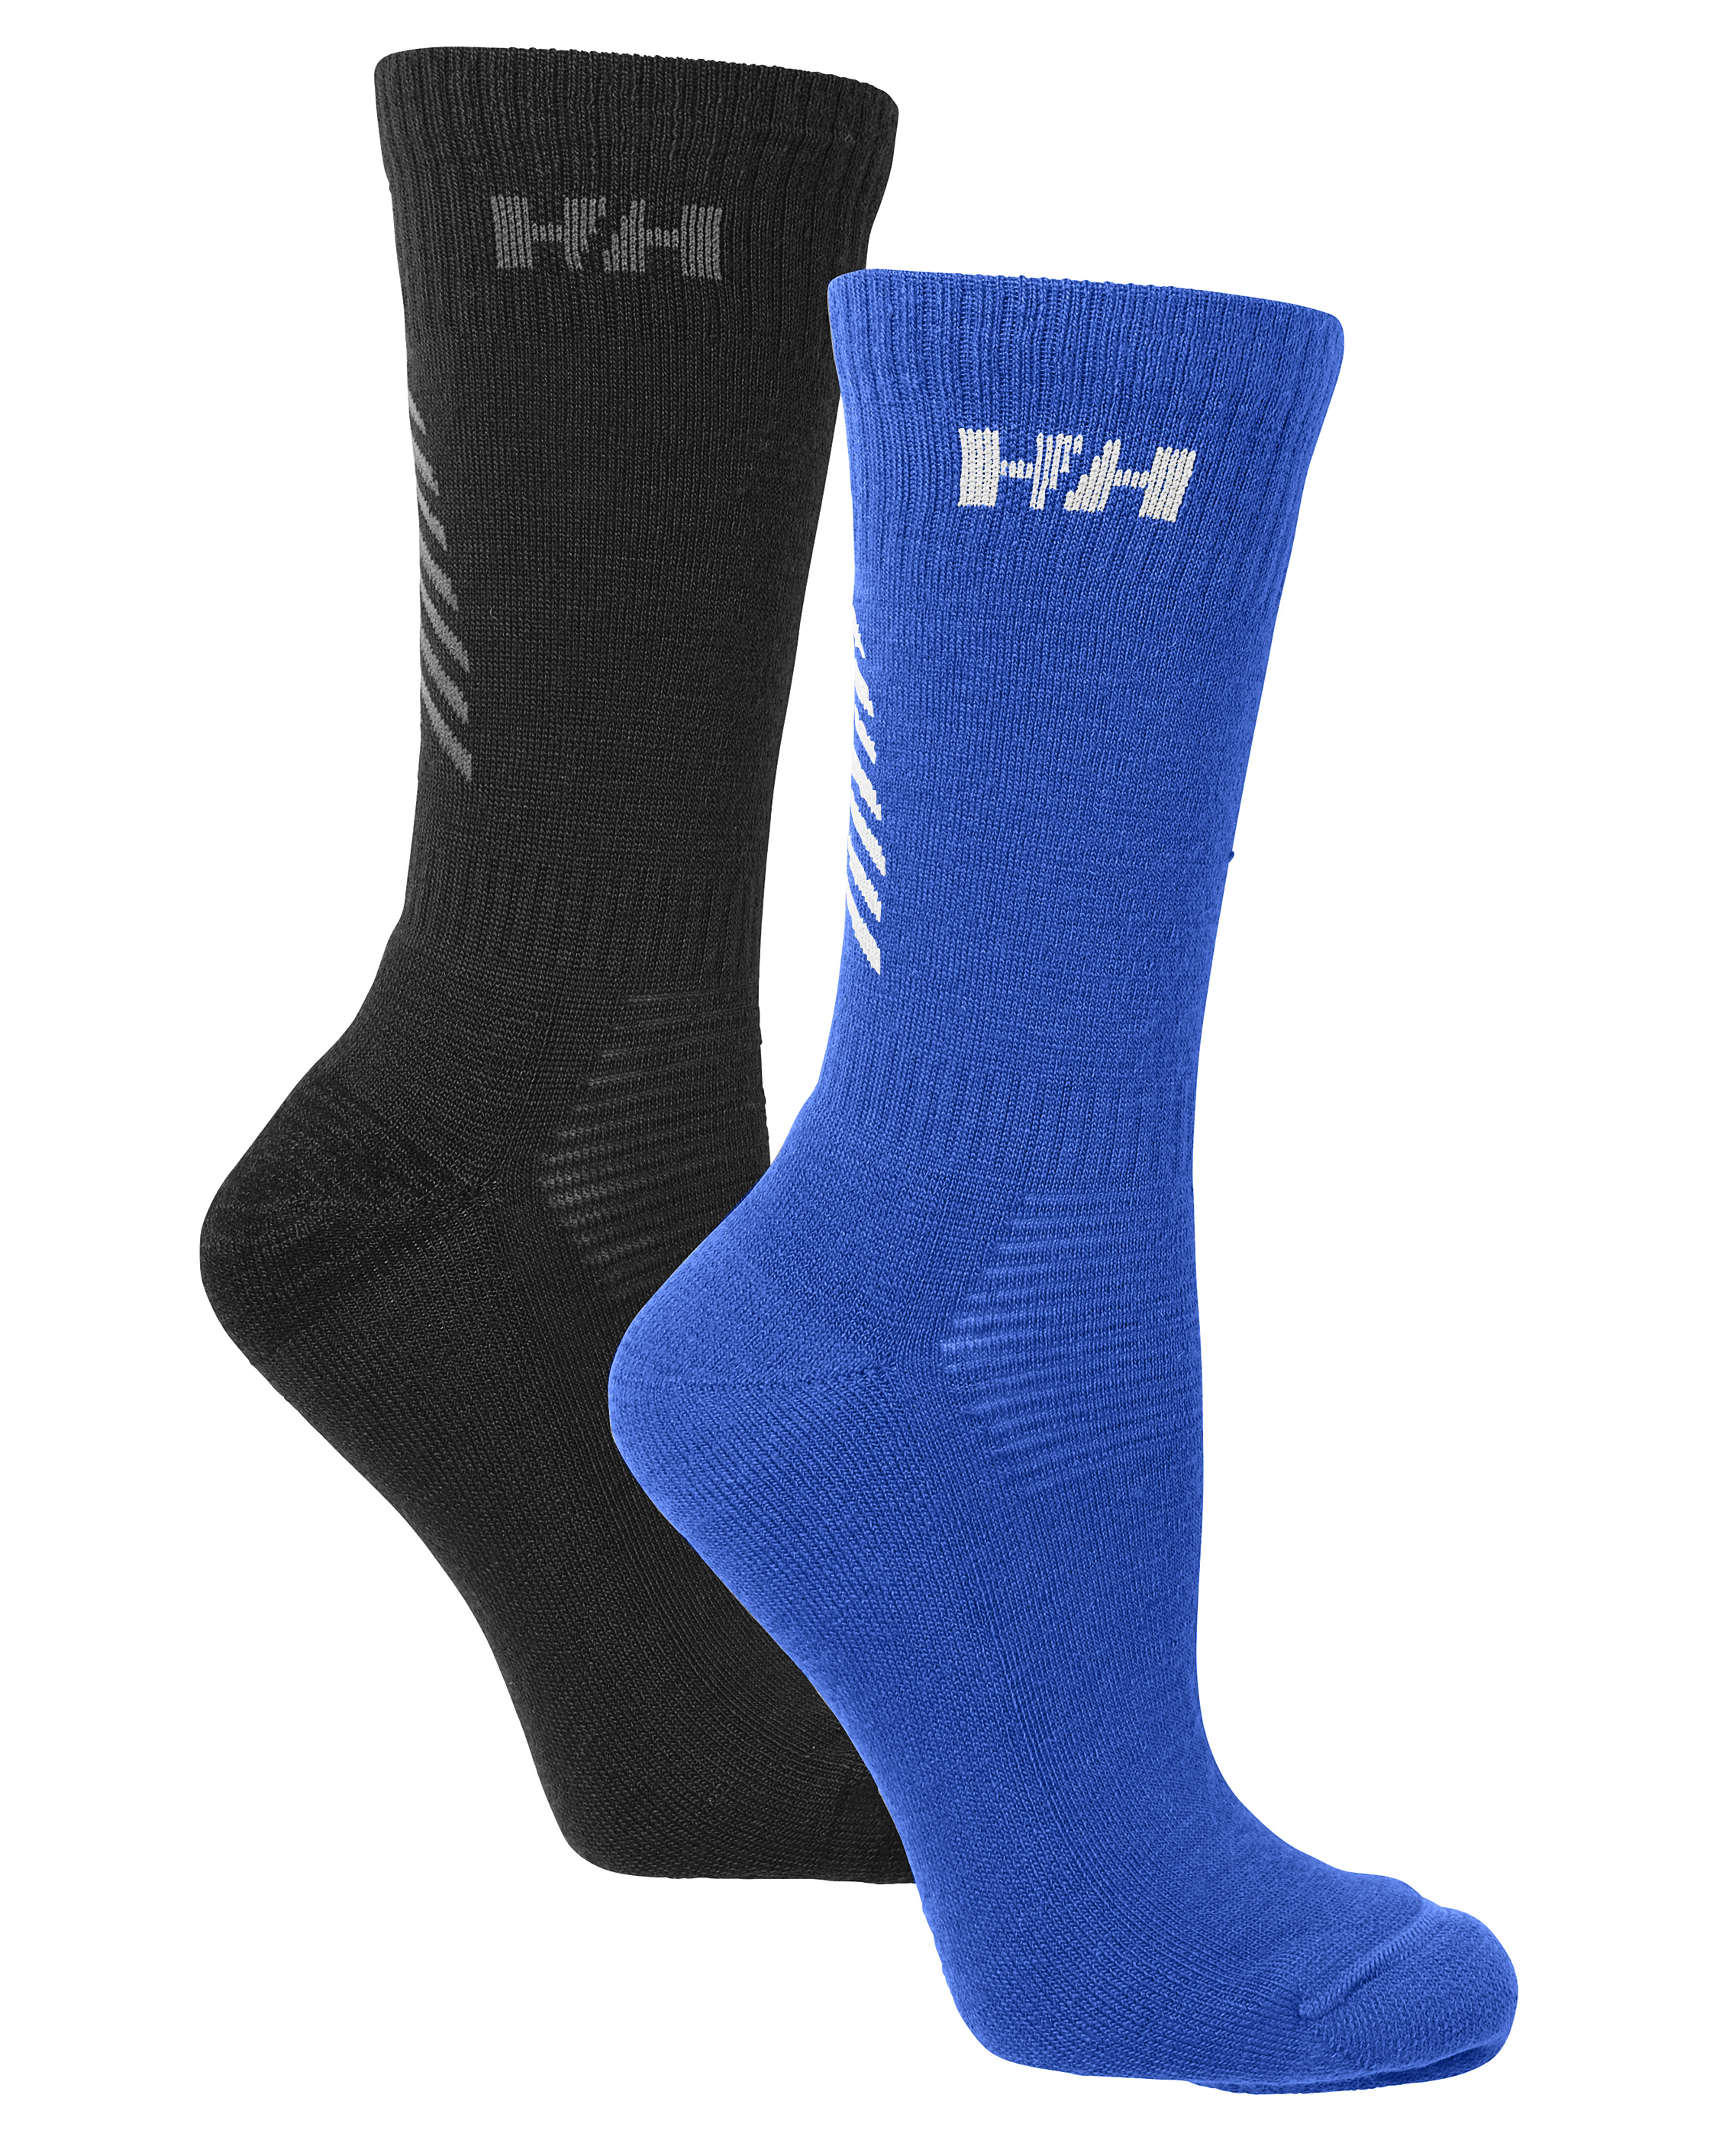 Helly Hansen Lifa Merino 2-Pack Socks - Olympian Blue/Black